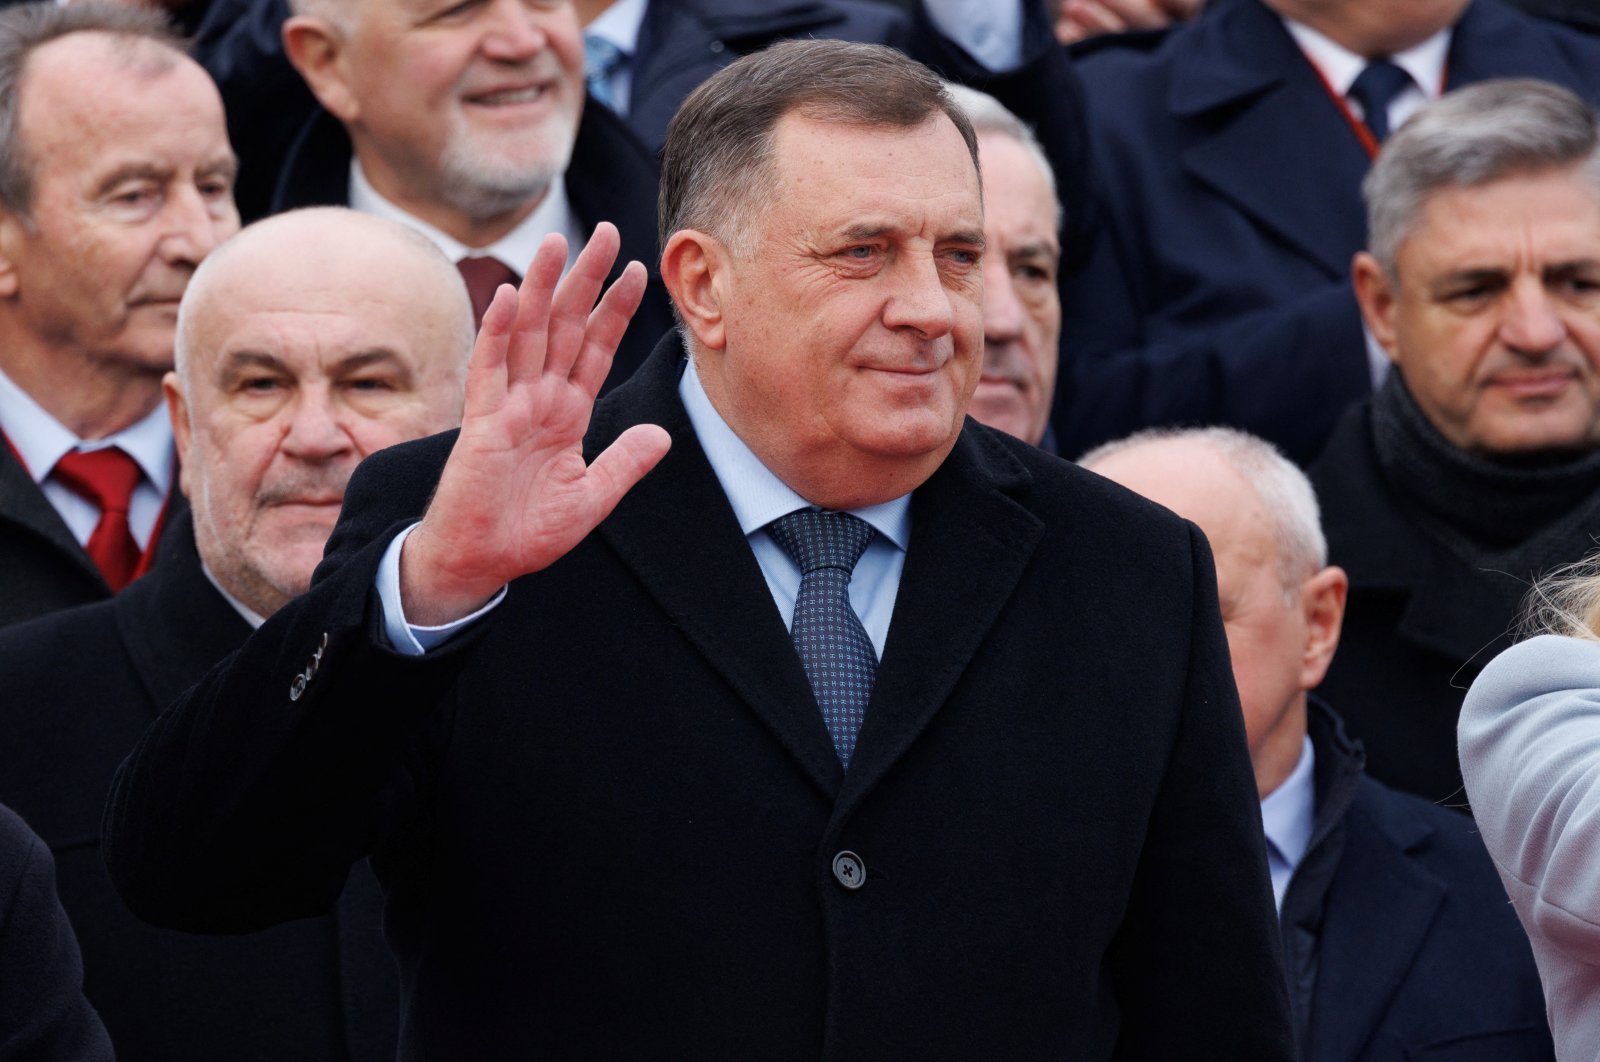 Nasib Bosnia tergantung pada dukungan pemimpin Turki, Serbia, Kroasia: Dodik